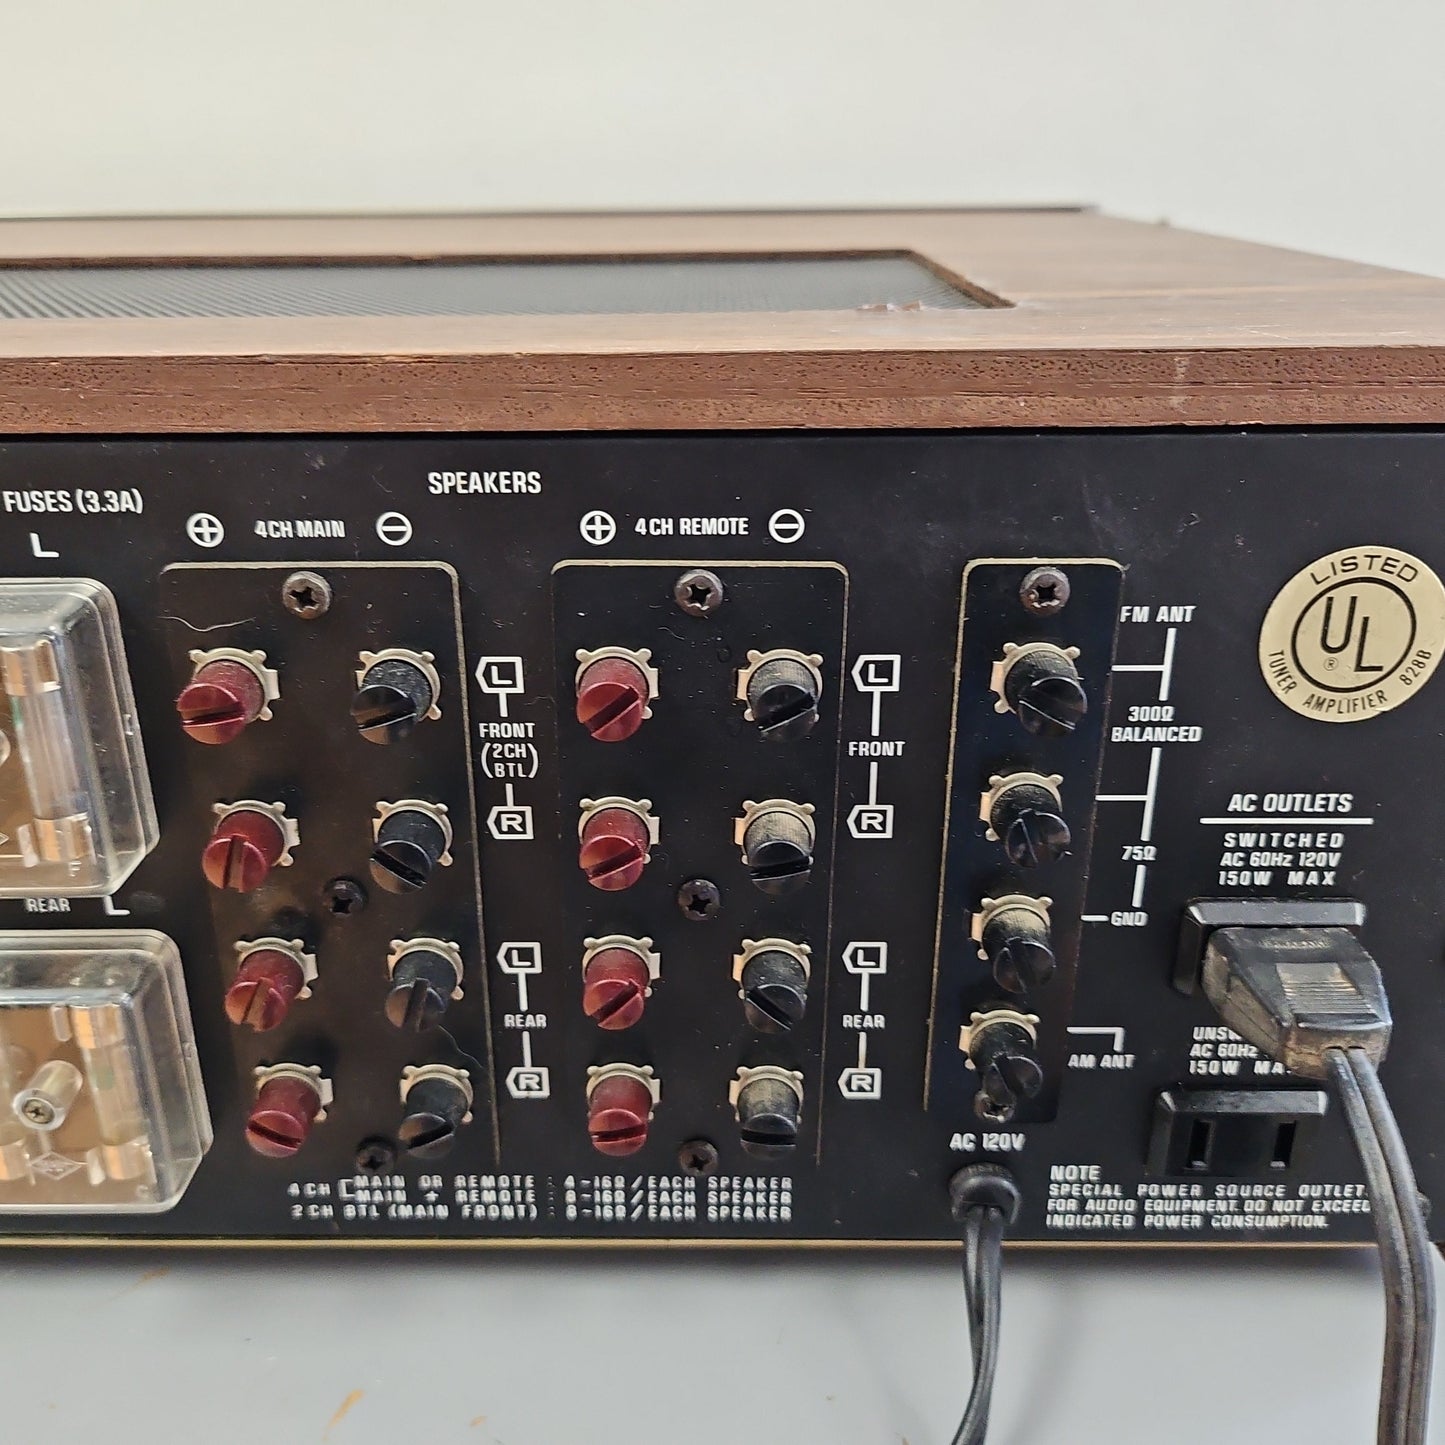 Technics SA-8100X Stereo Receiver * 46W RMS * 1974 * $100 Flat Ship CONUS Only